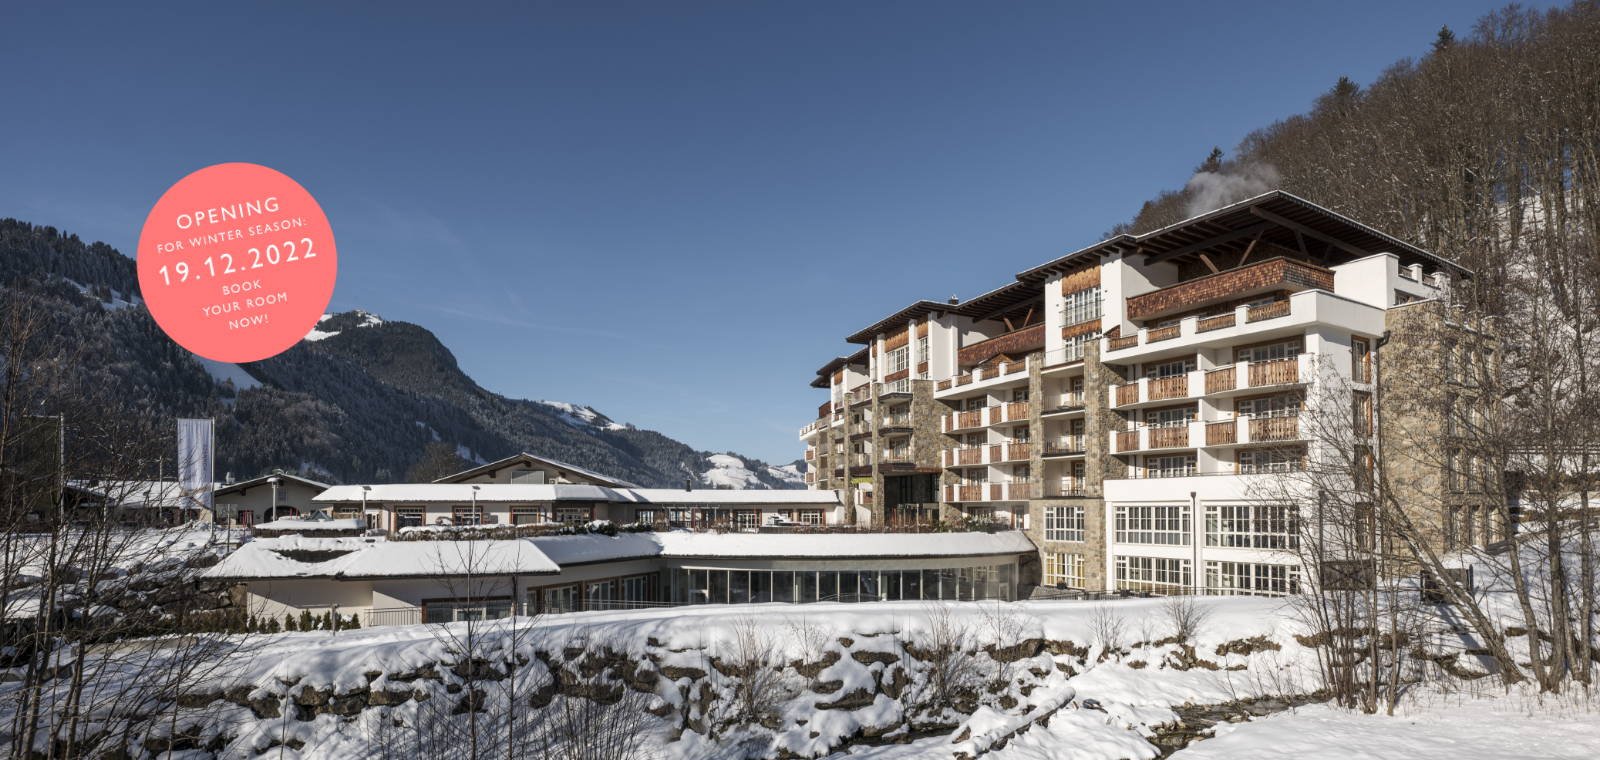 The beautiful hotel in snowy Kitzbühel